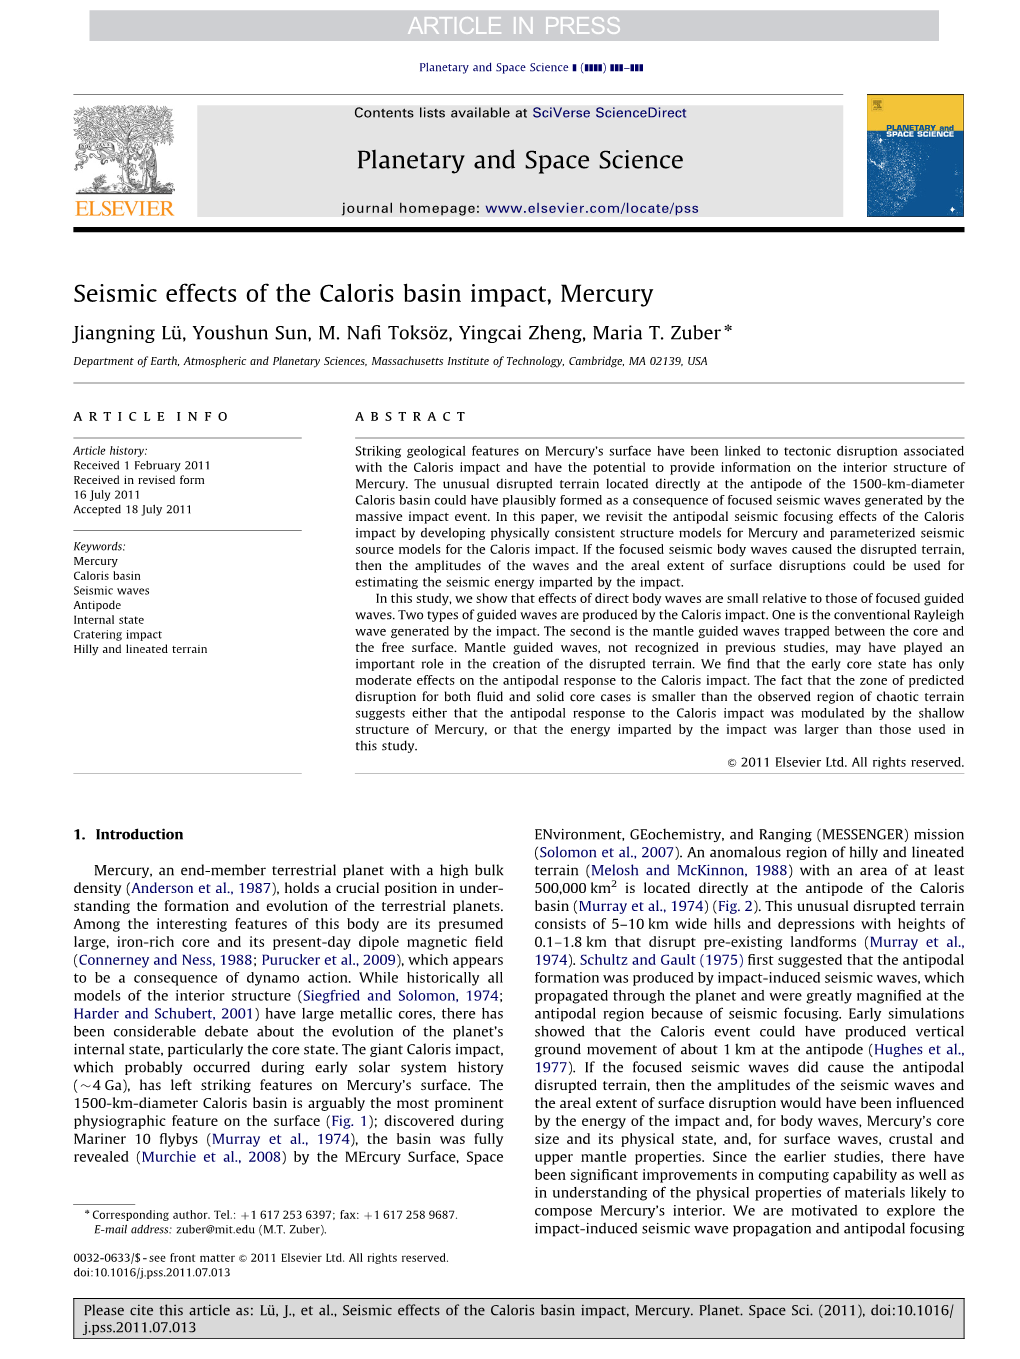 Seismic Effects of the Caloris Basin Impact, Mercury